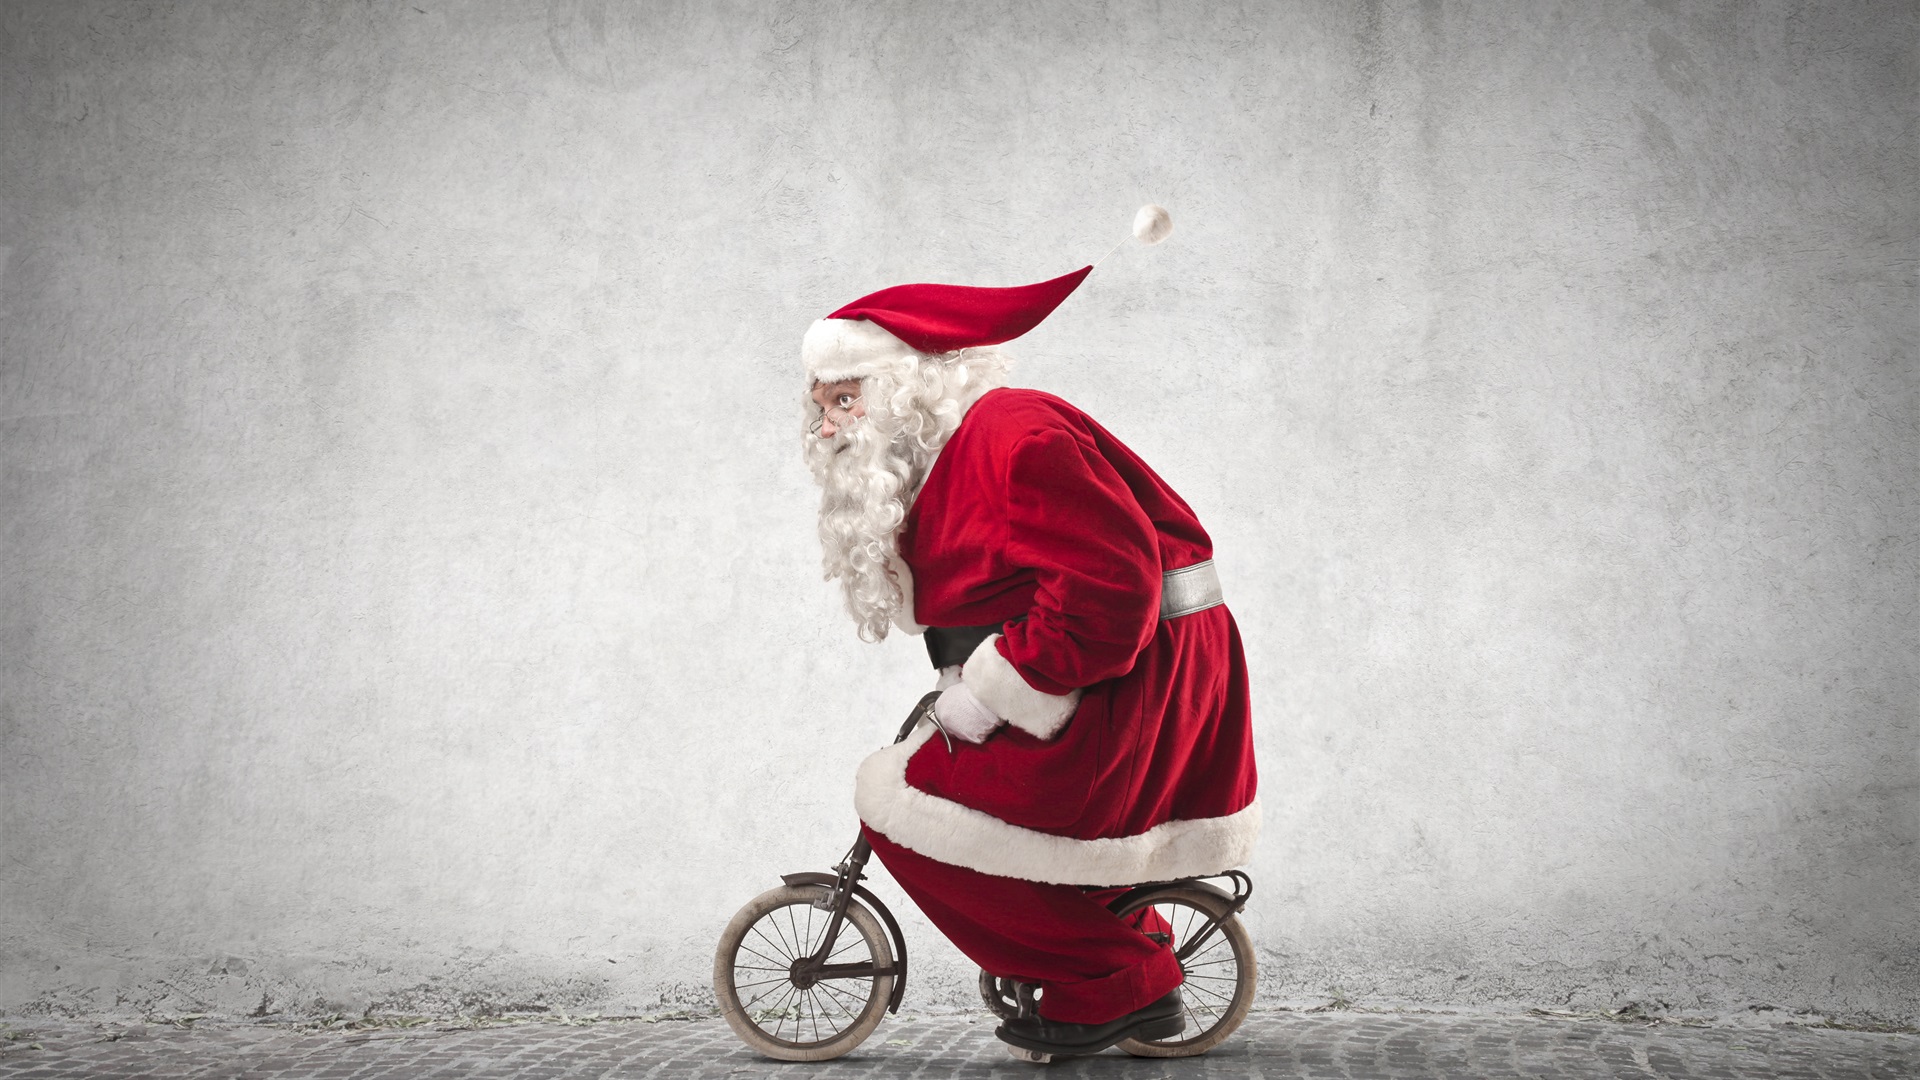 Santa-Claus-riding-a-small-bike-humor-red-coat-glasses-Christmas-theme_1920x1080.jpg